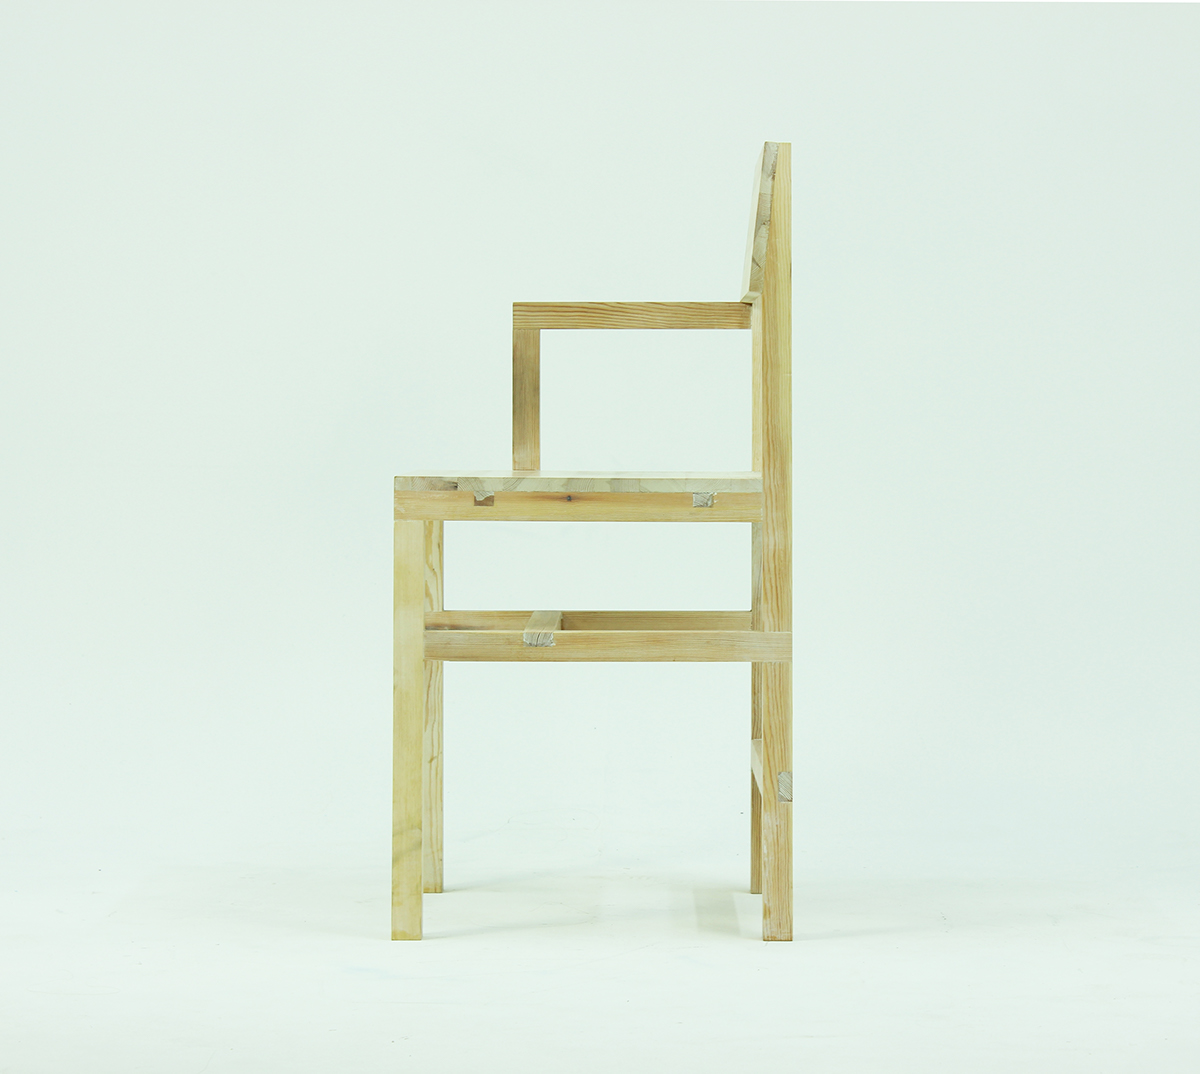 chair sculpture wood furniture Tree  industrial design  architecture art